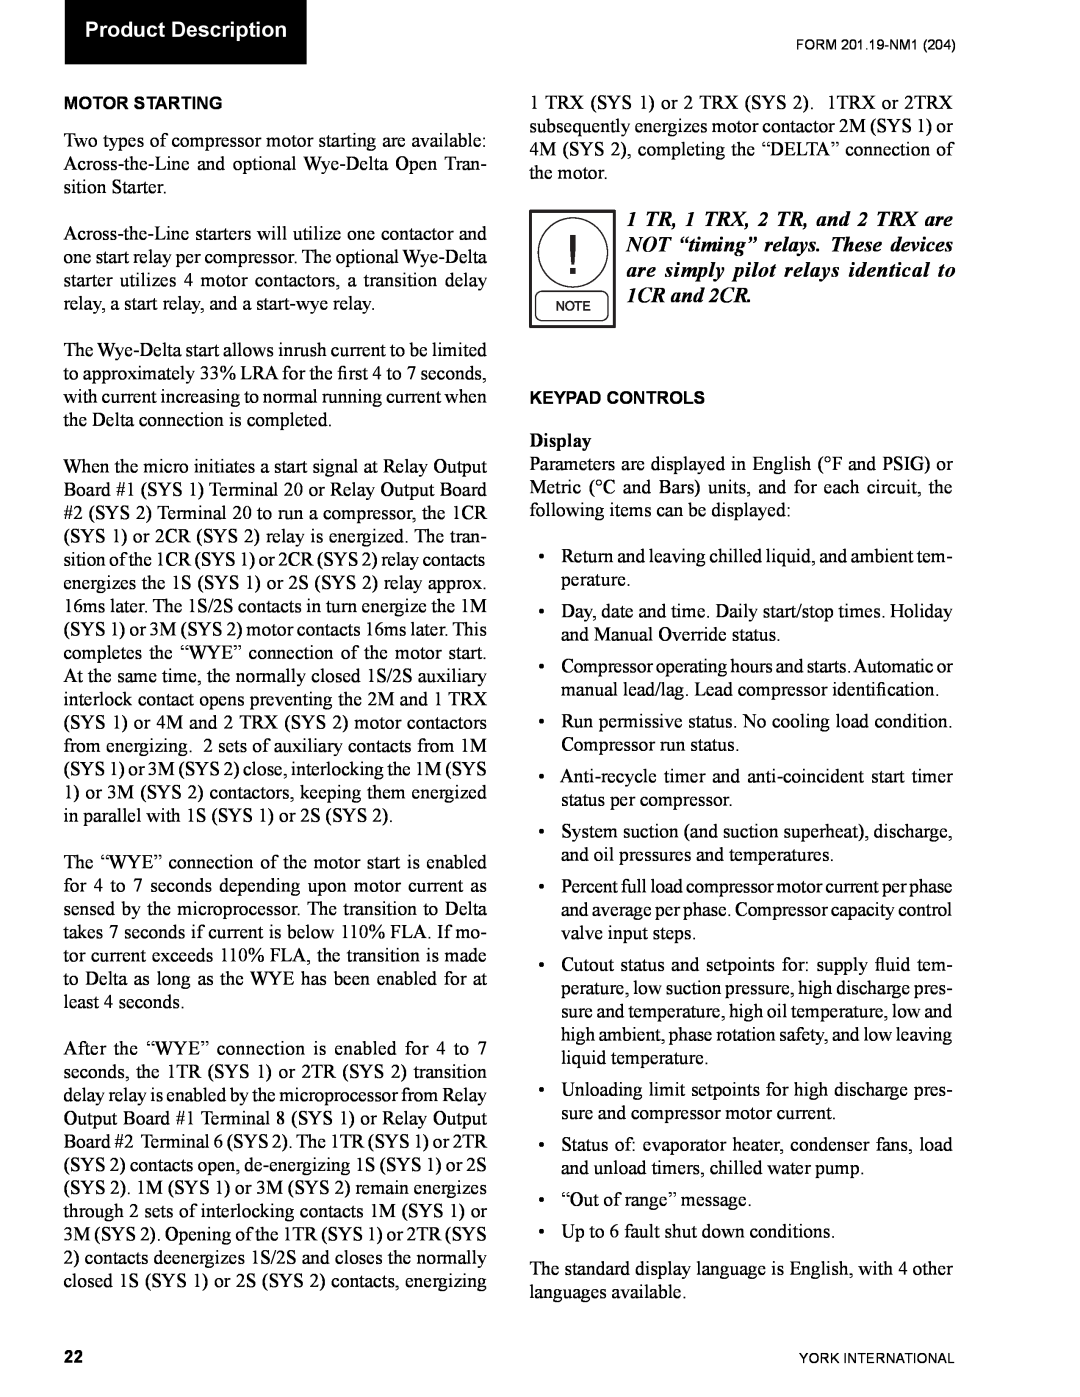 York YCAS0130 manual Product Description, Display 